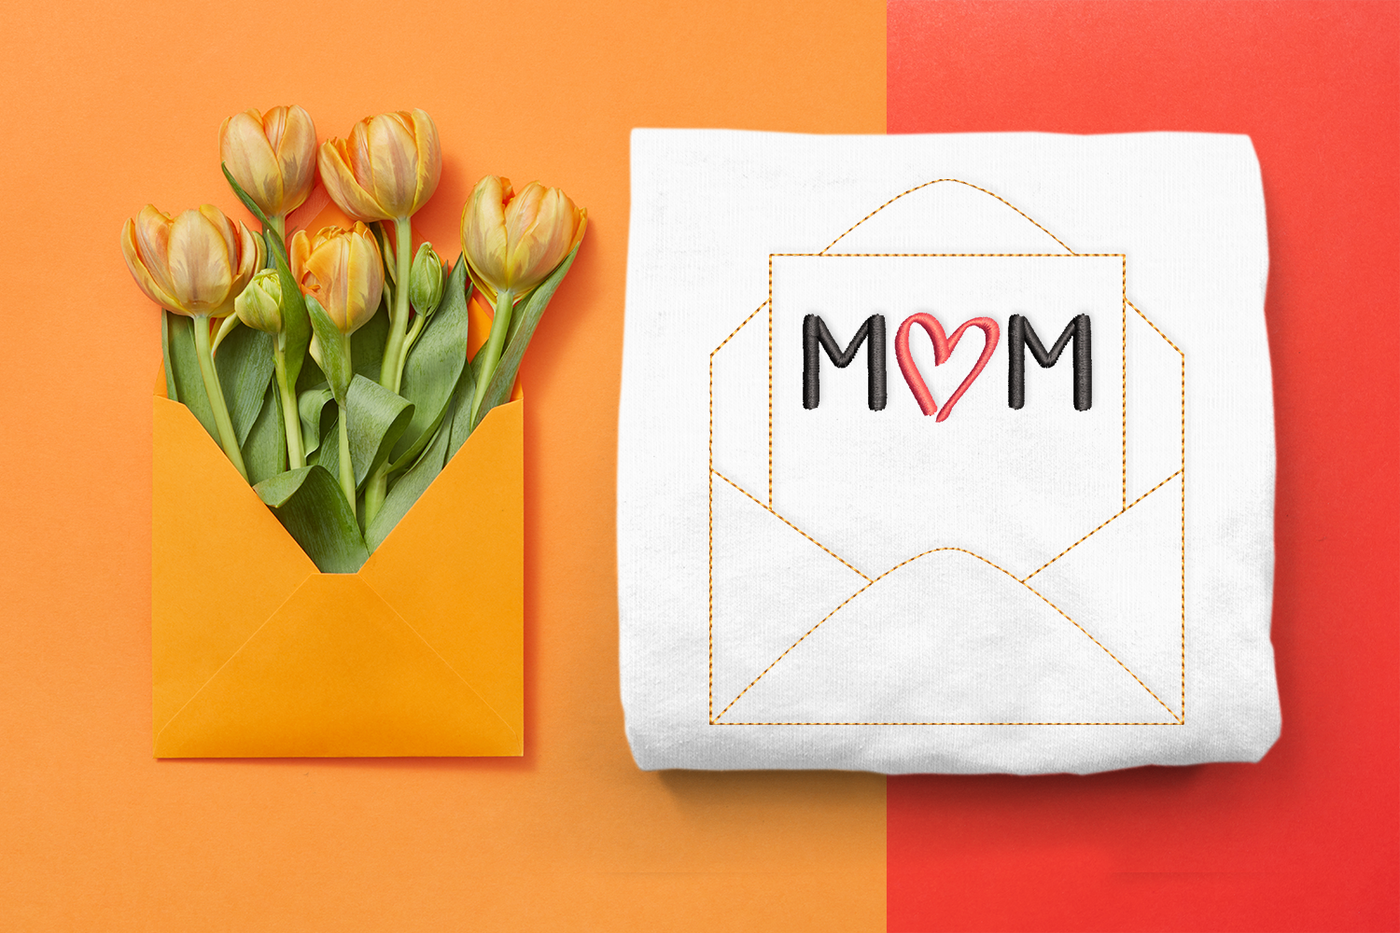 Mom envelope embroidery design